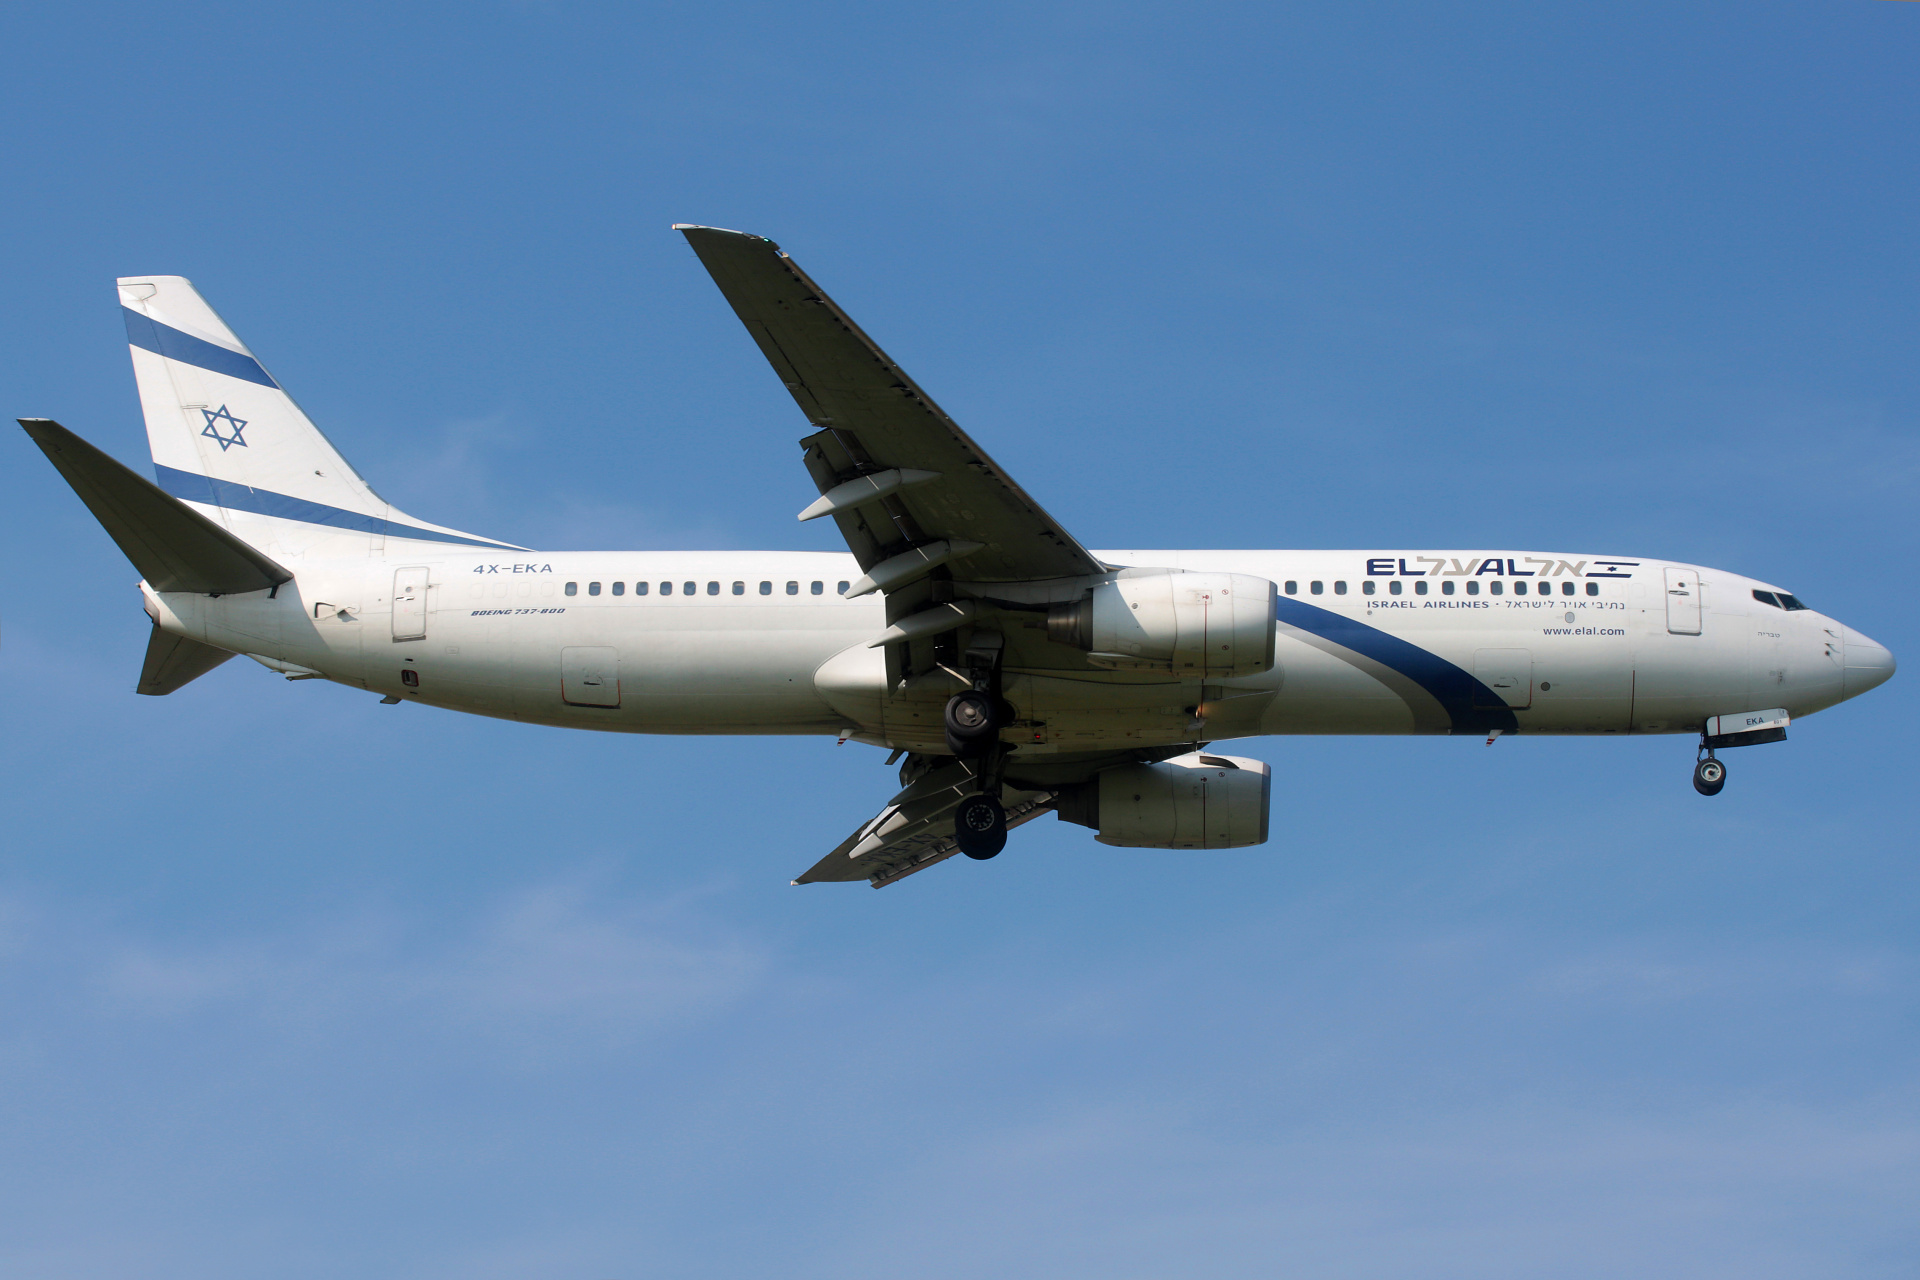 4X-EKA (Aircraft » EPWA Spotting » Boeing 737-800 » El Al Israel Airlines)